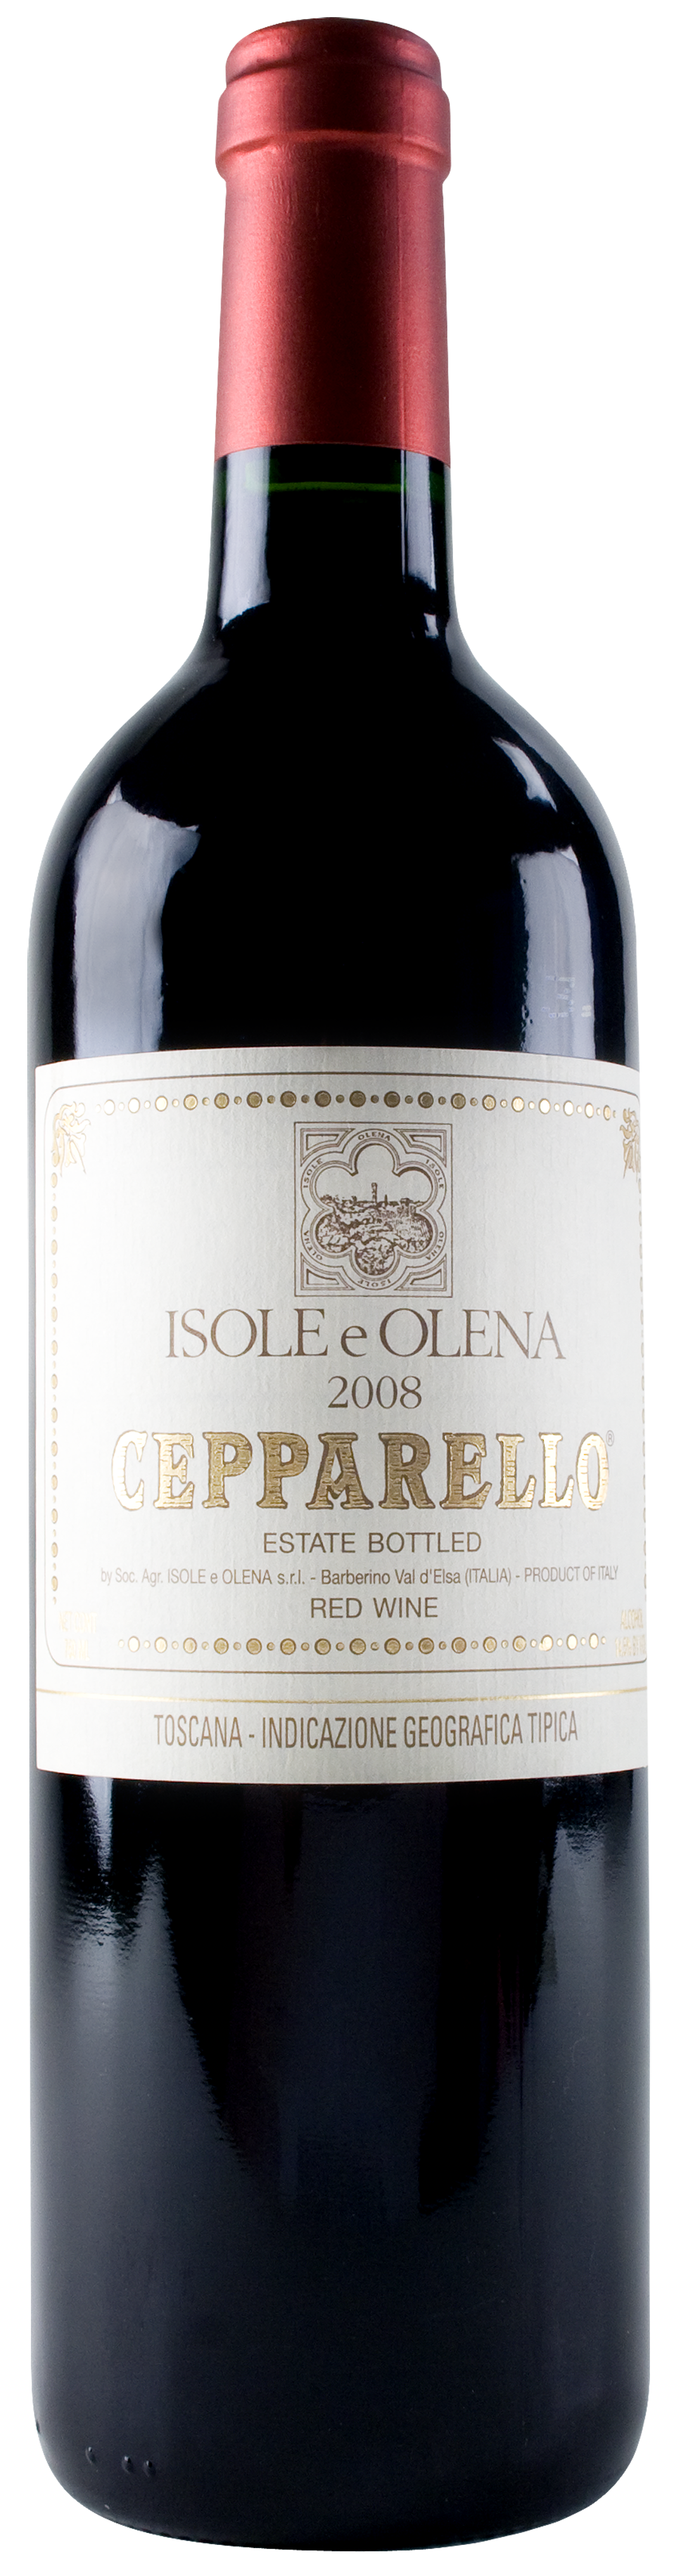 Bottle shot of 2011 Cepparello